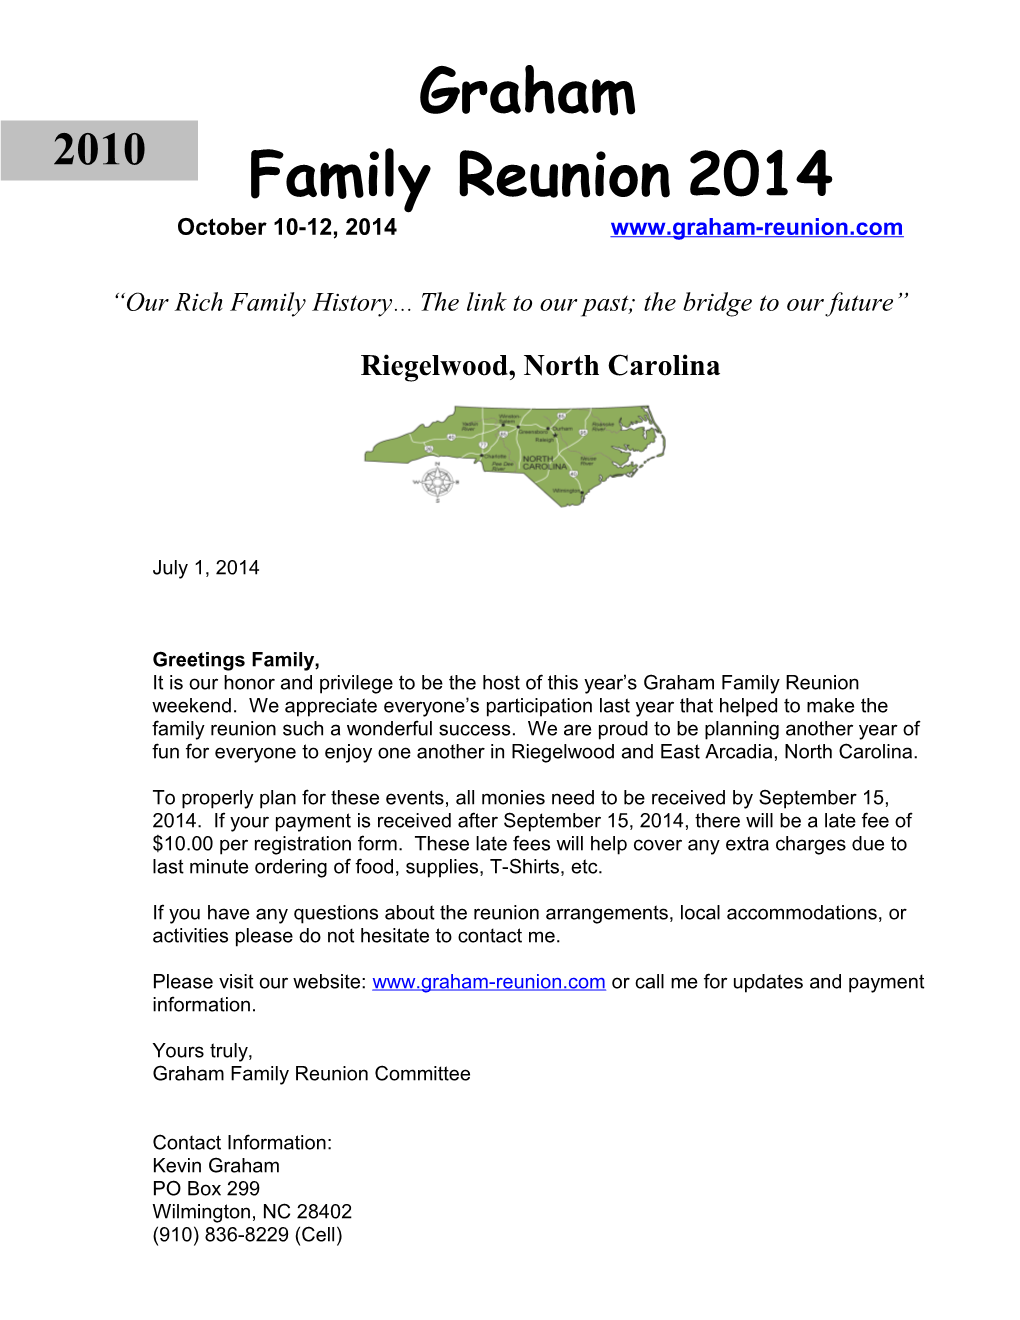 Family Reunion 2014